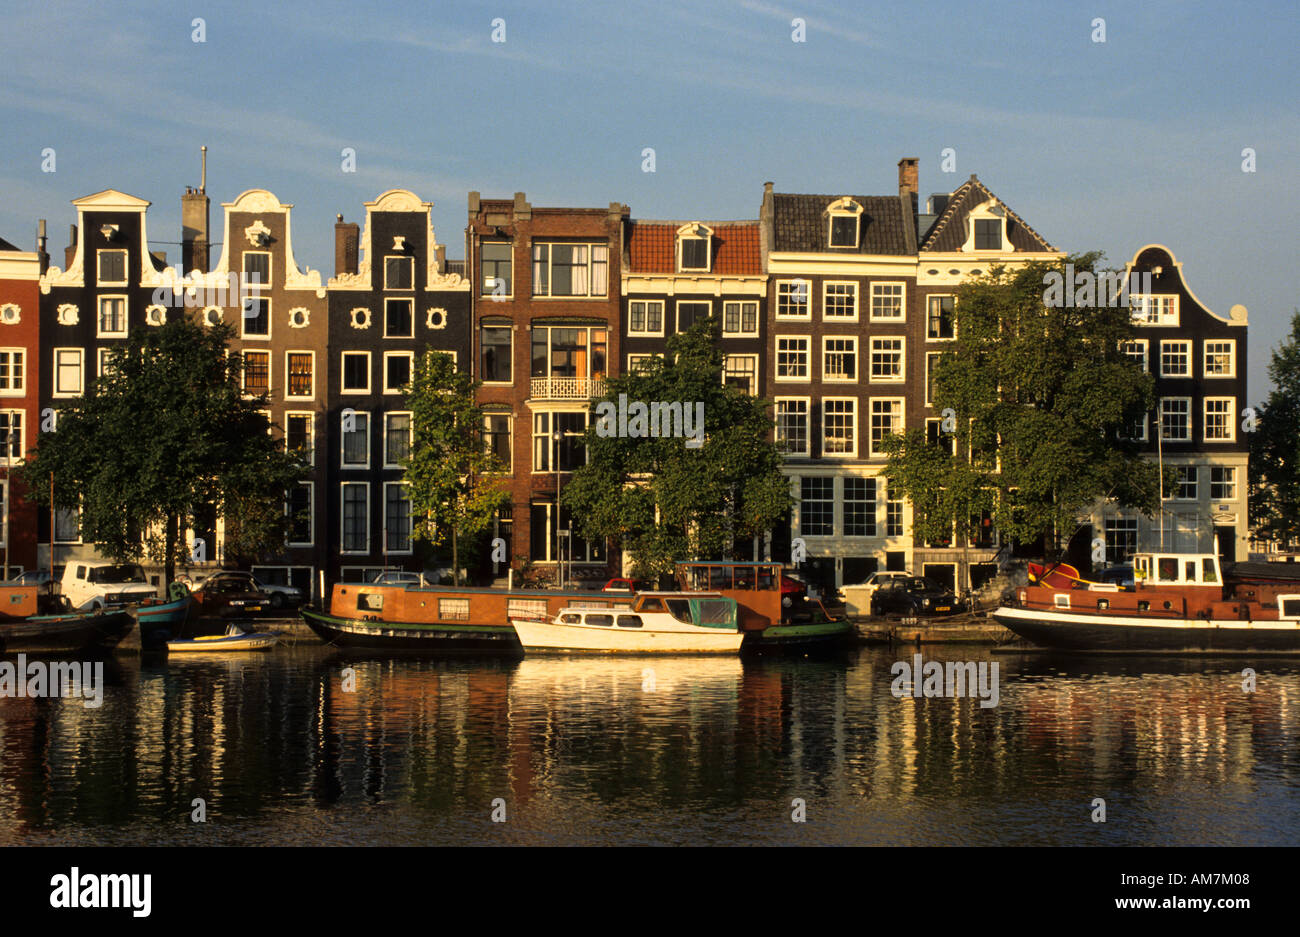 Amsterdamer Kanal Wasser Hausboote Amstel Niederlande Stockfoto